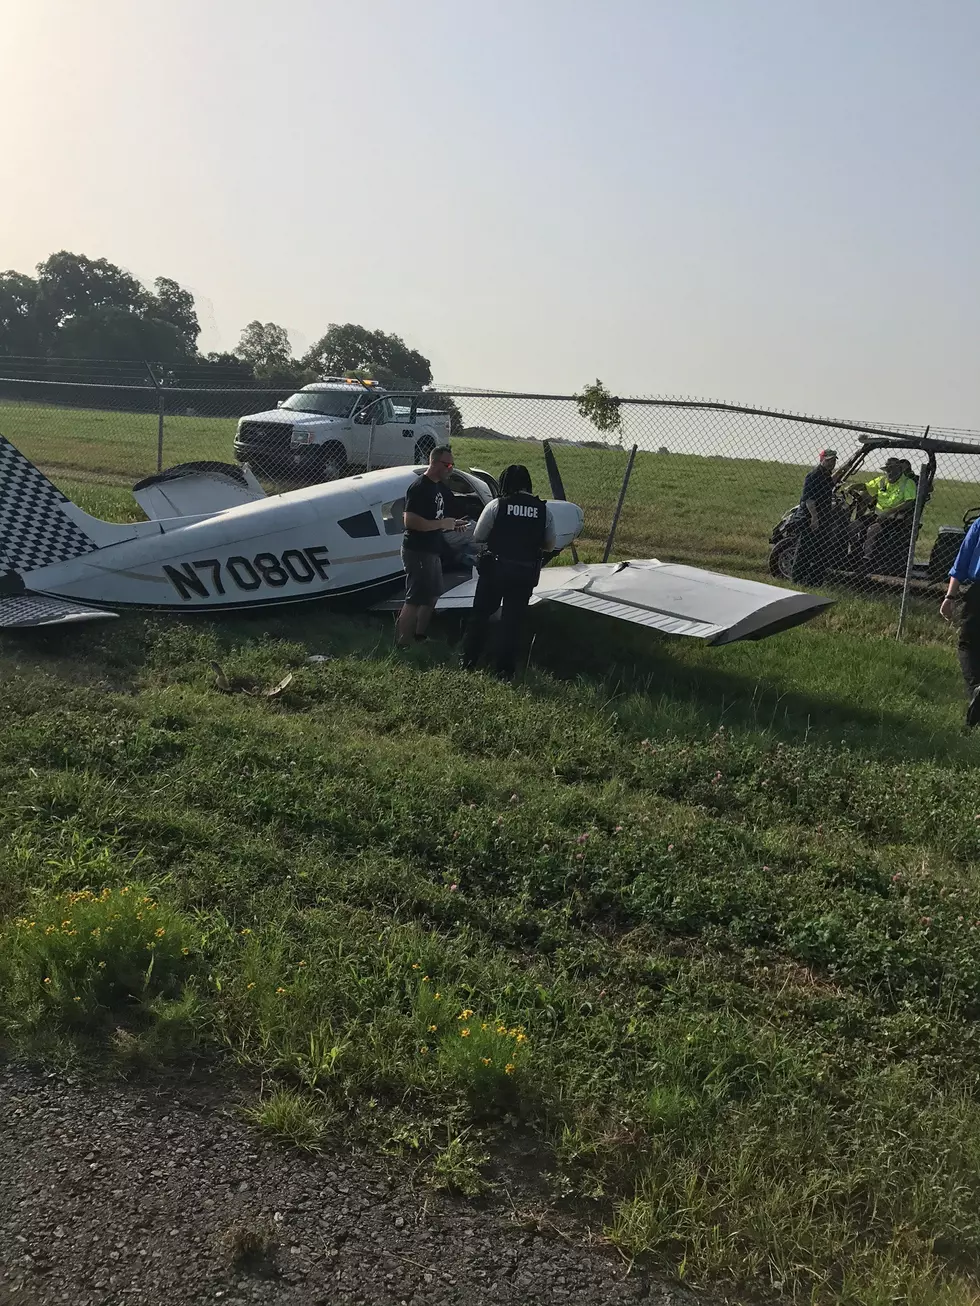 BREAKING: Plane Crash at Shreveport’s Downtown Airport